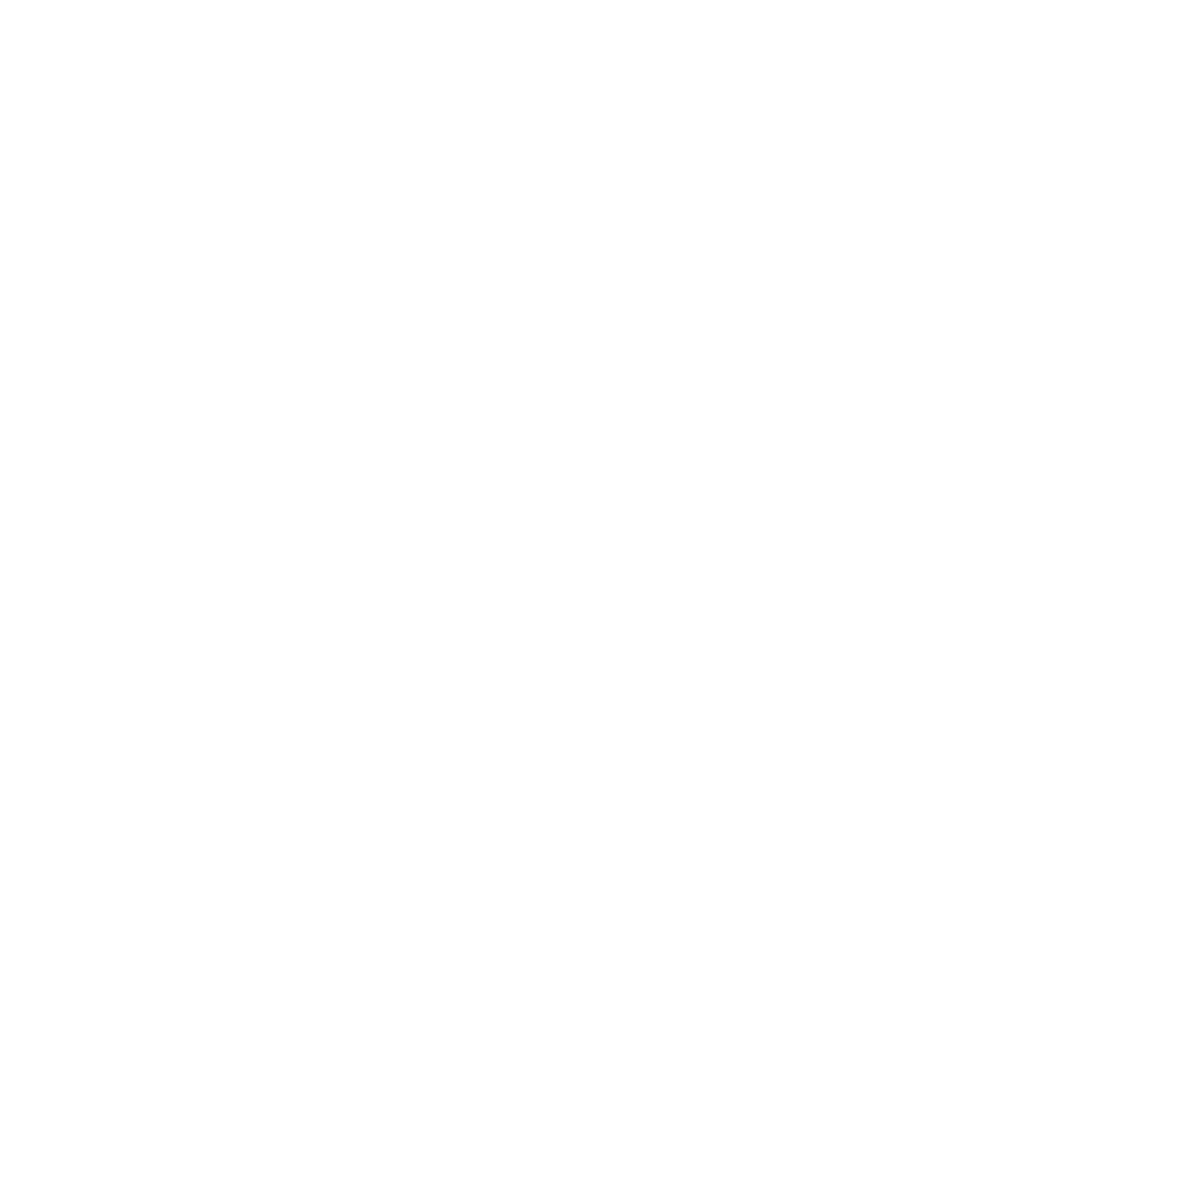 Hotel Karaoke logo white